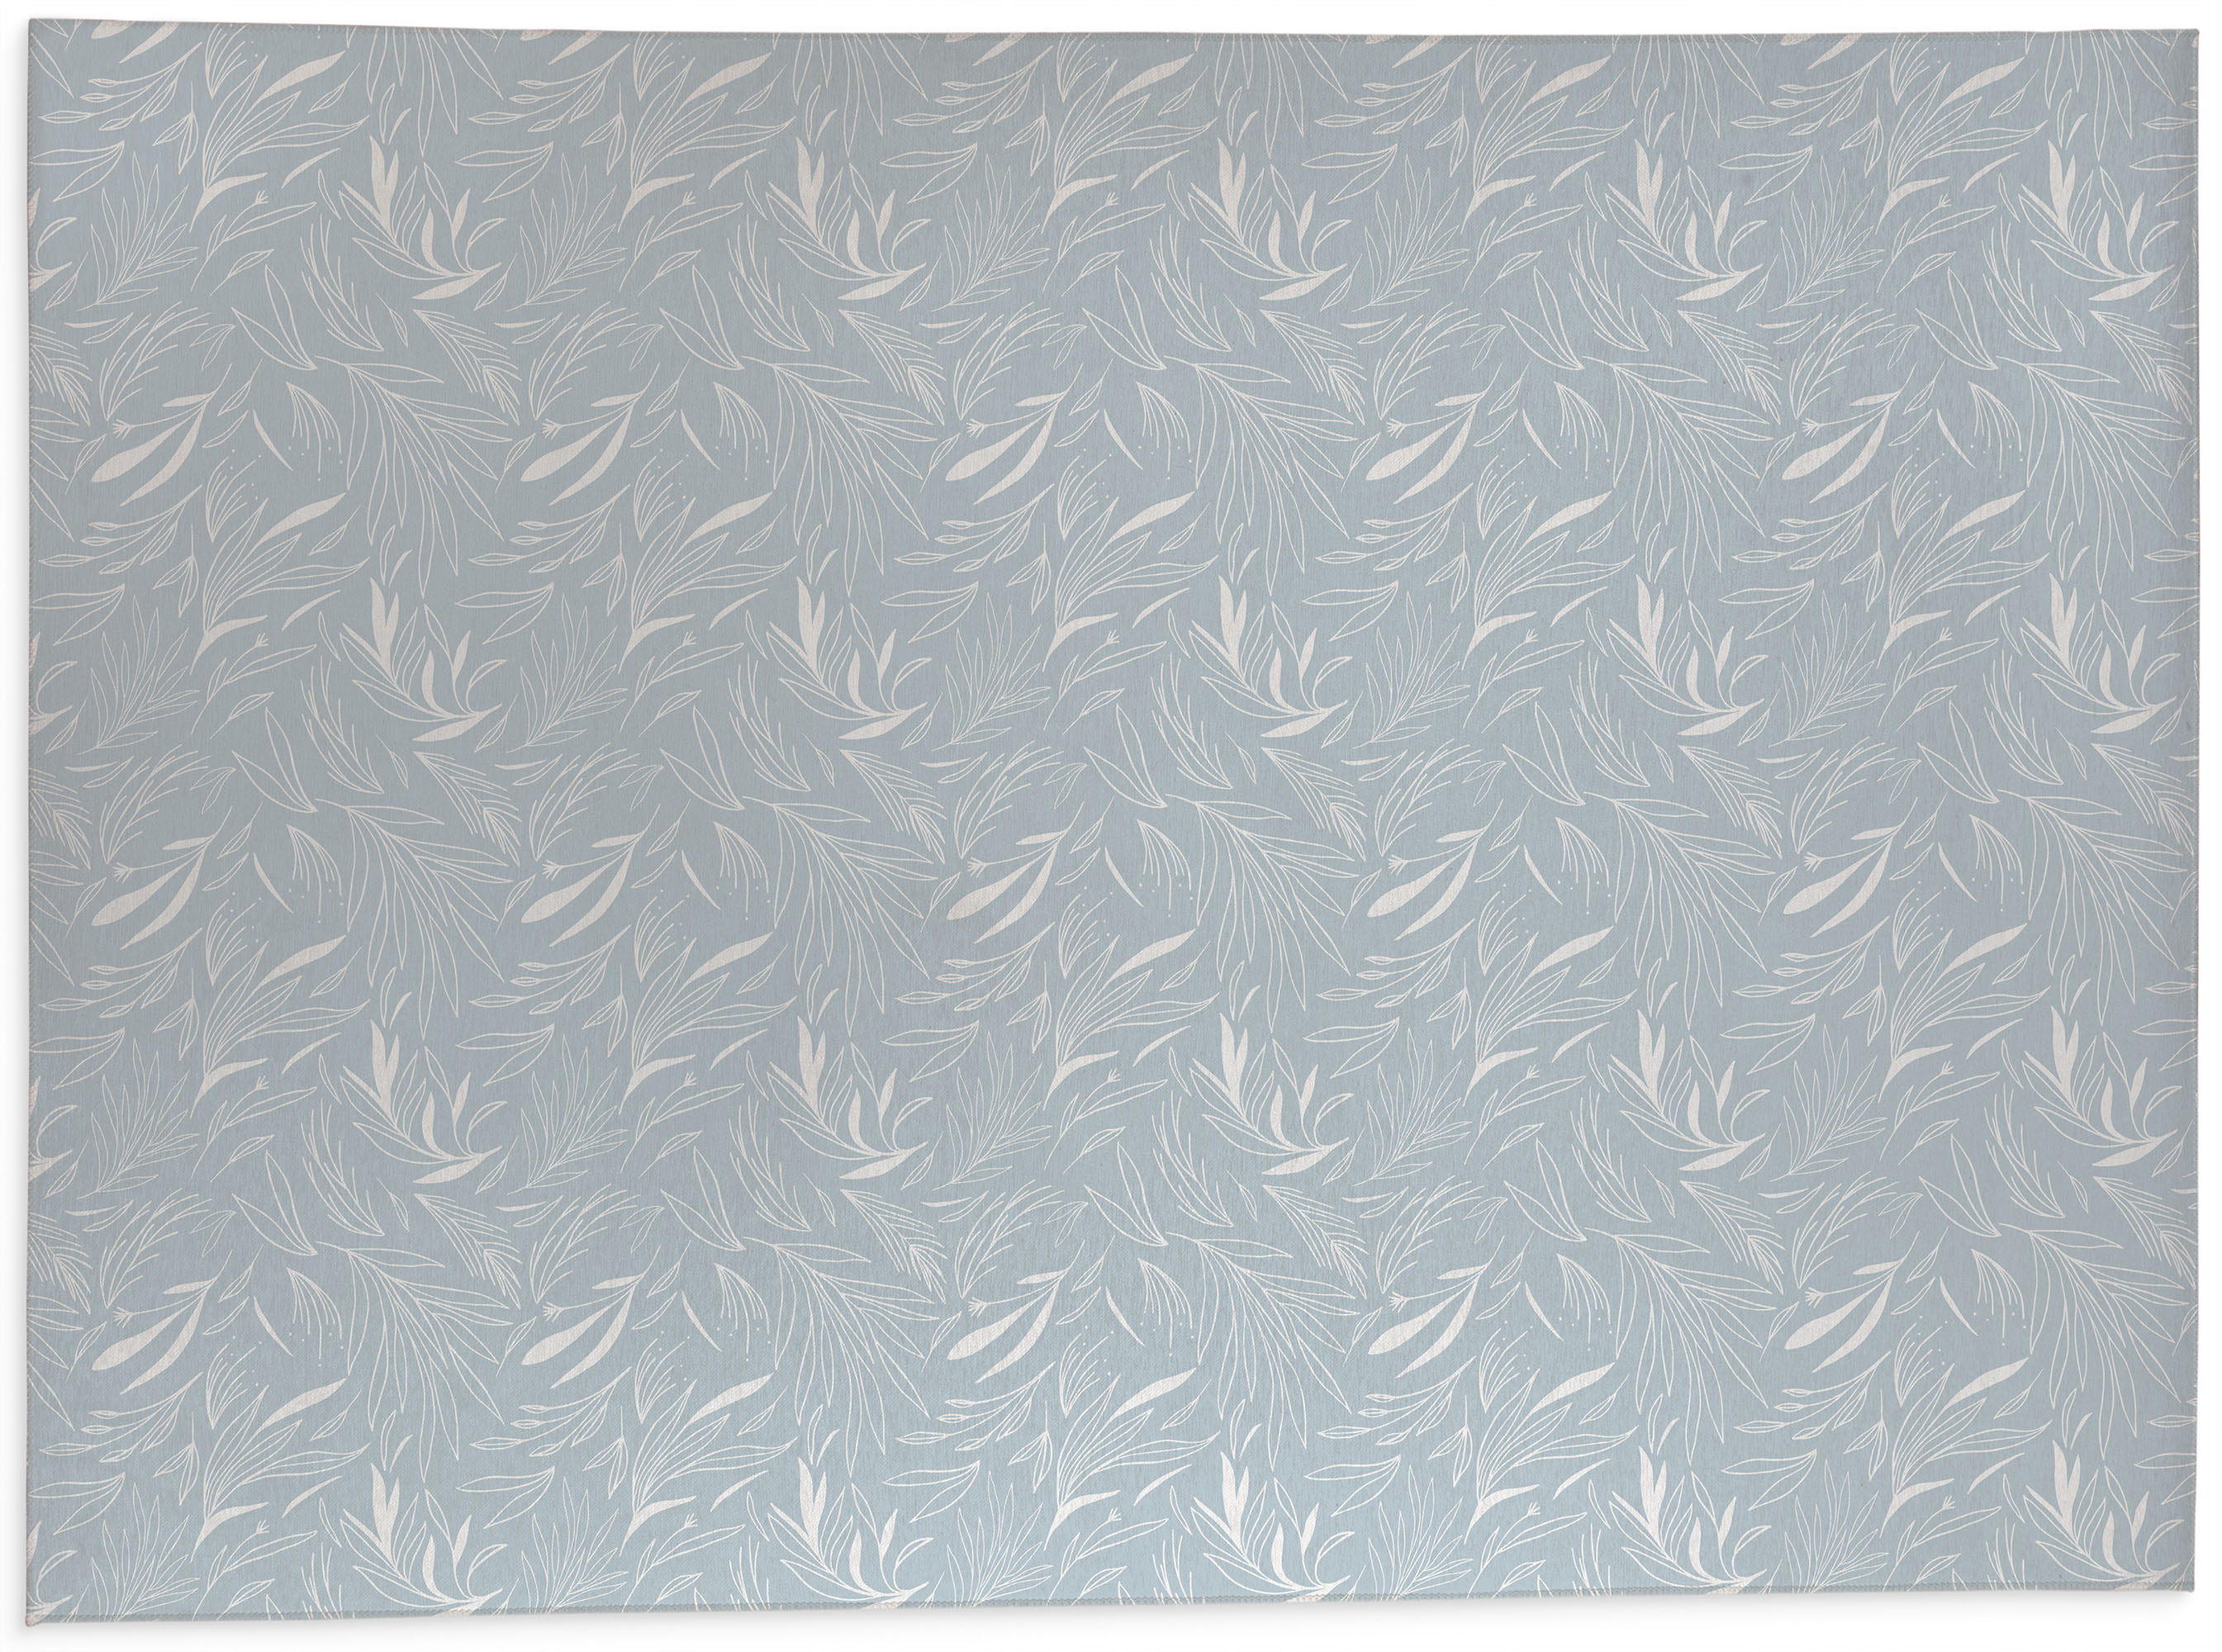 artikel Verplicht Intens Ethereal Leaves Soft Blue Indoor Floor Mat by Kavka Designs - Walmart.com